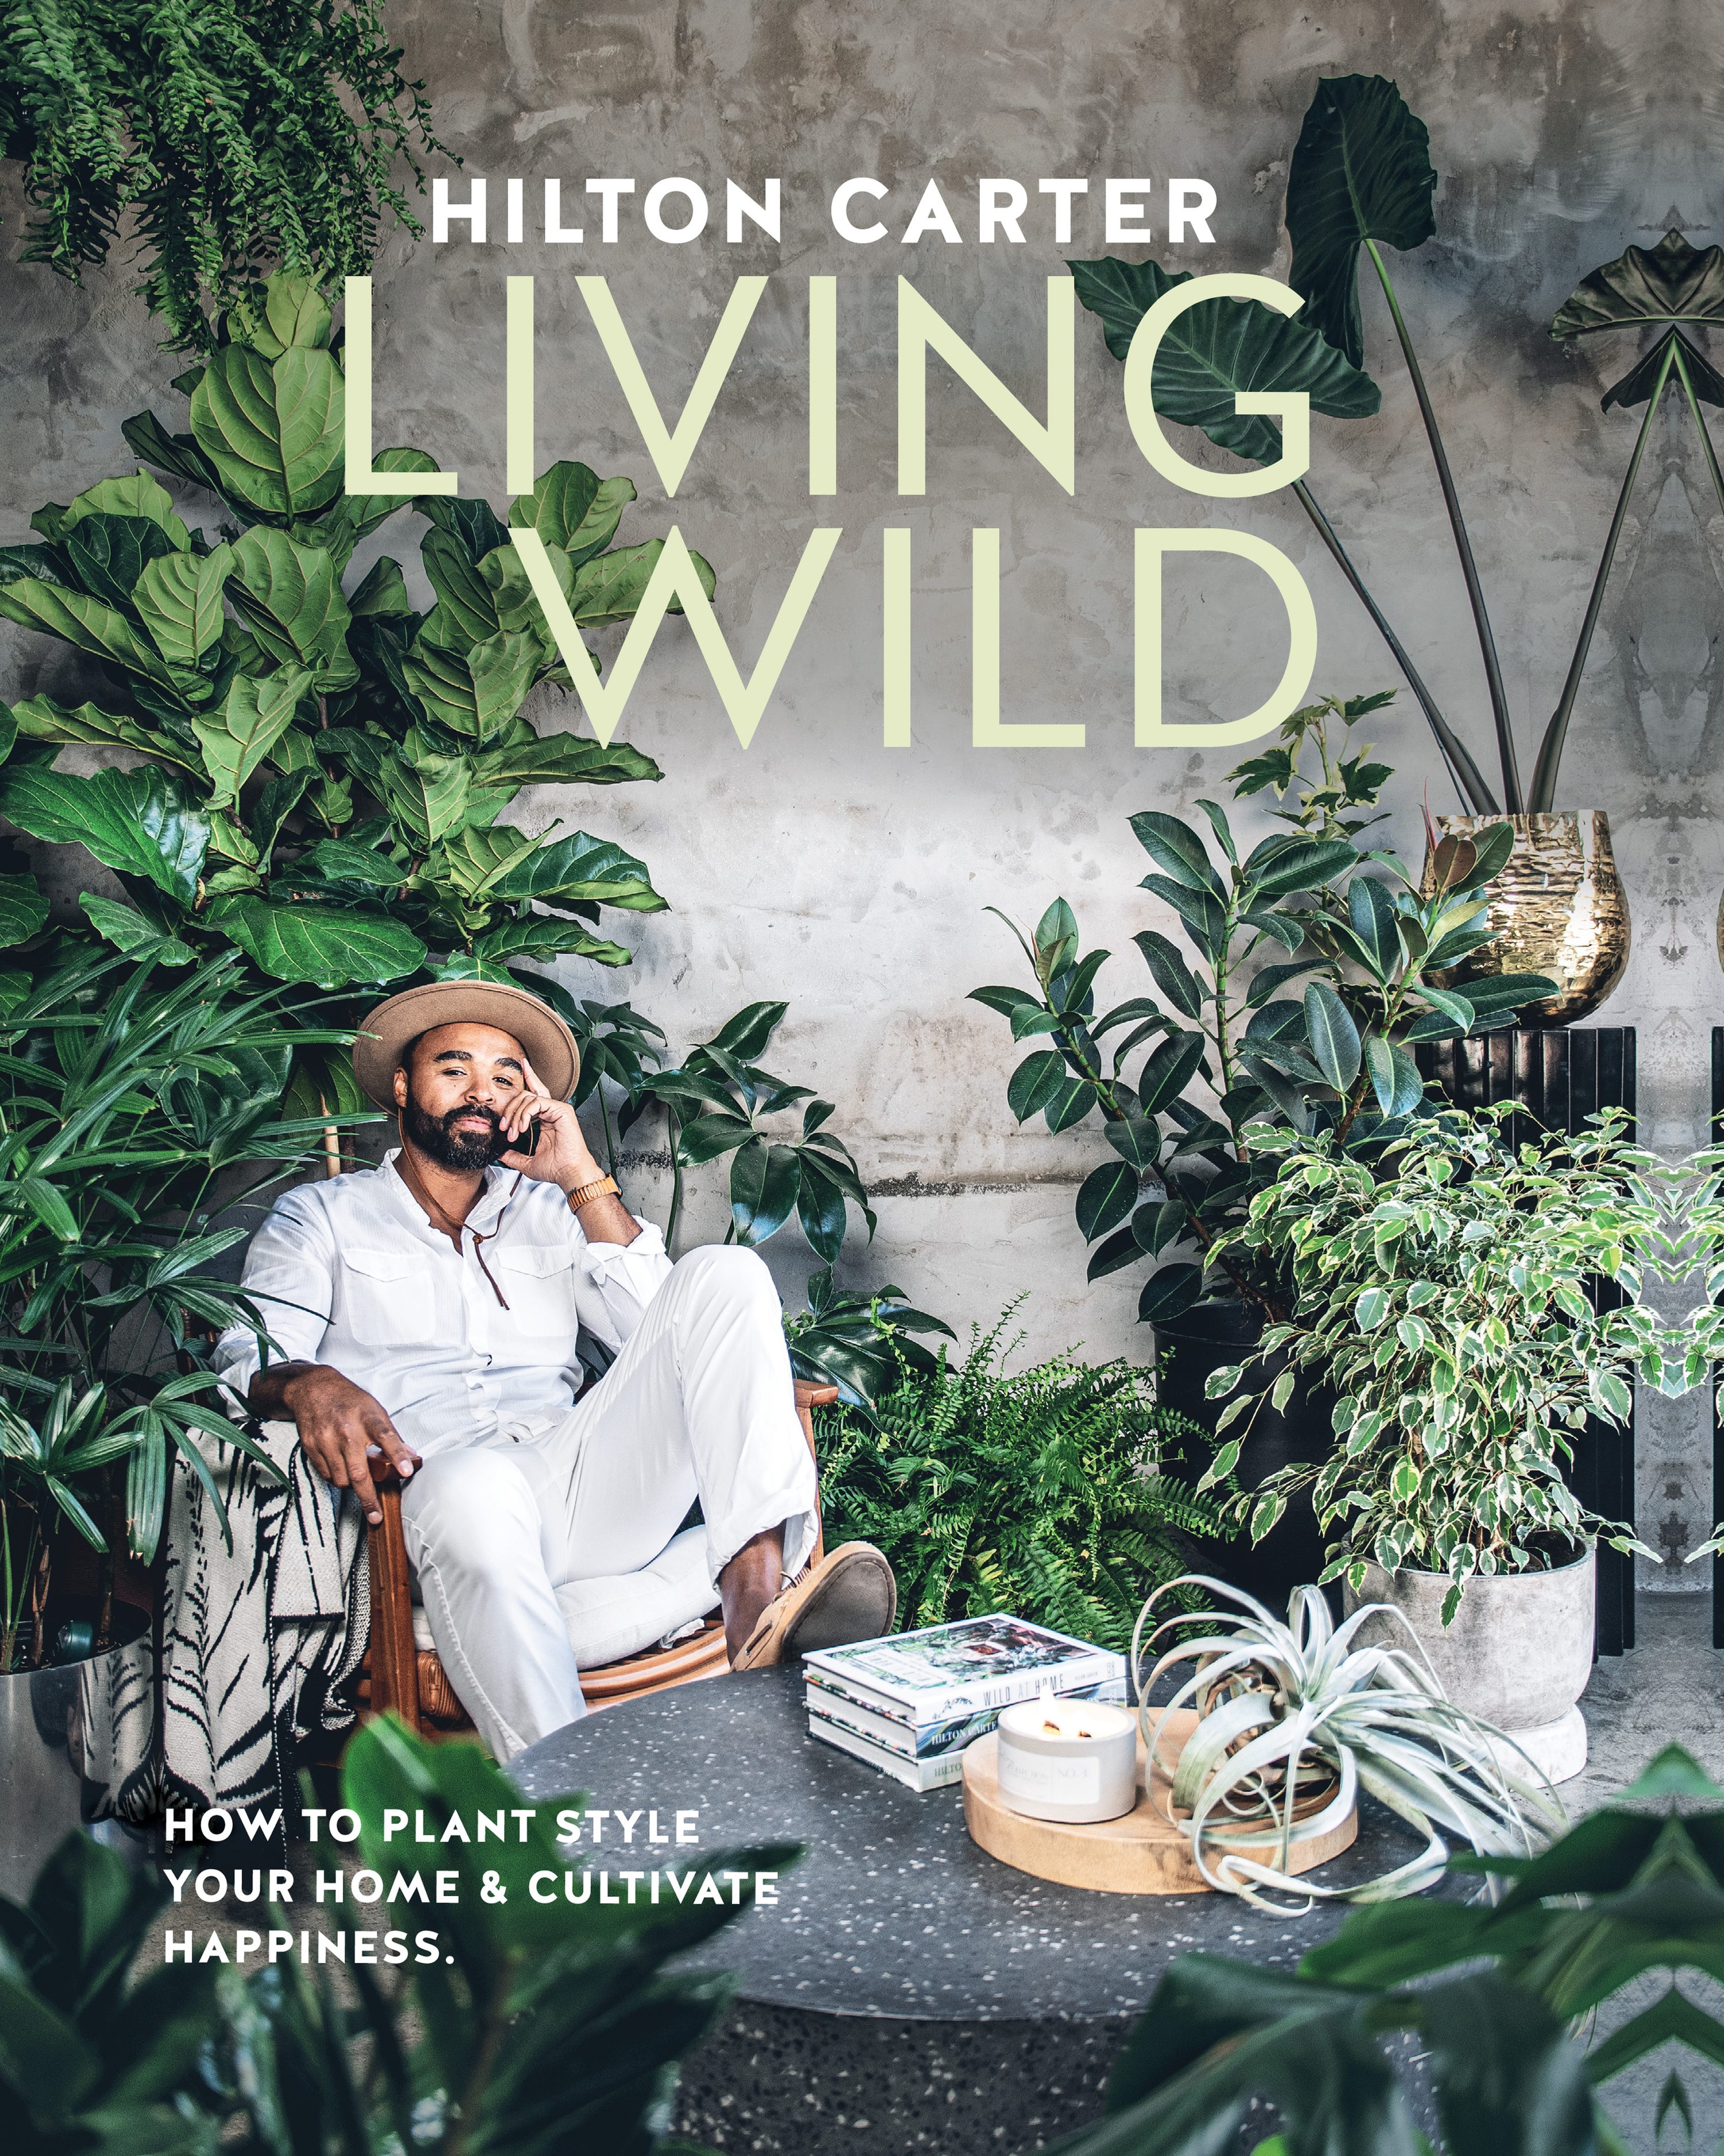 Hilton Carter cultivates vibrant, verdant, lush interiors in new book